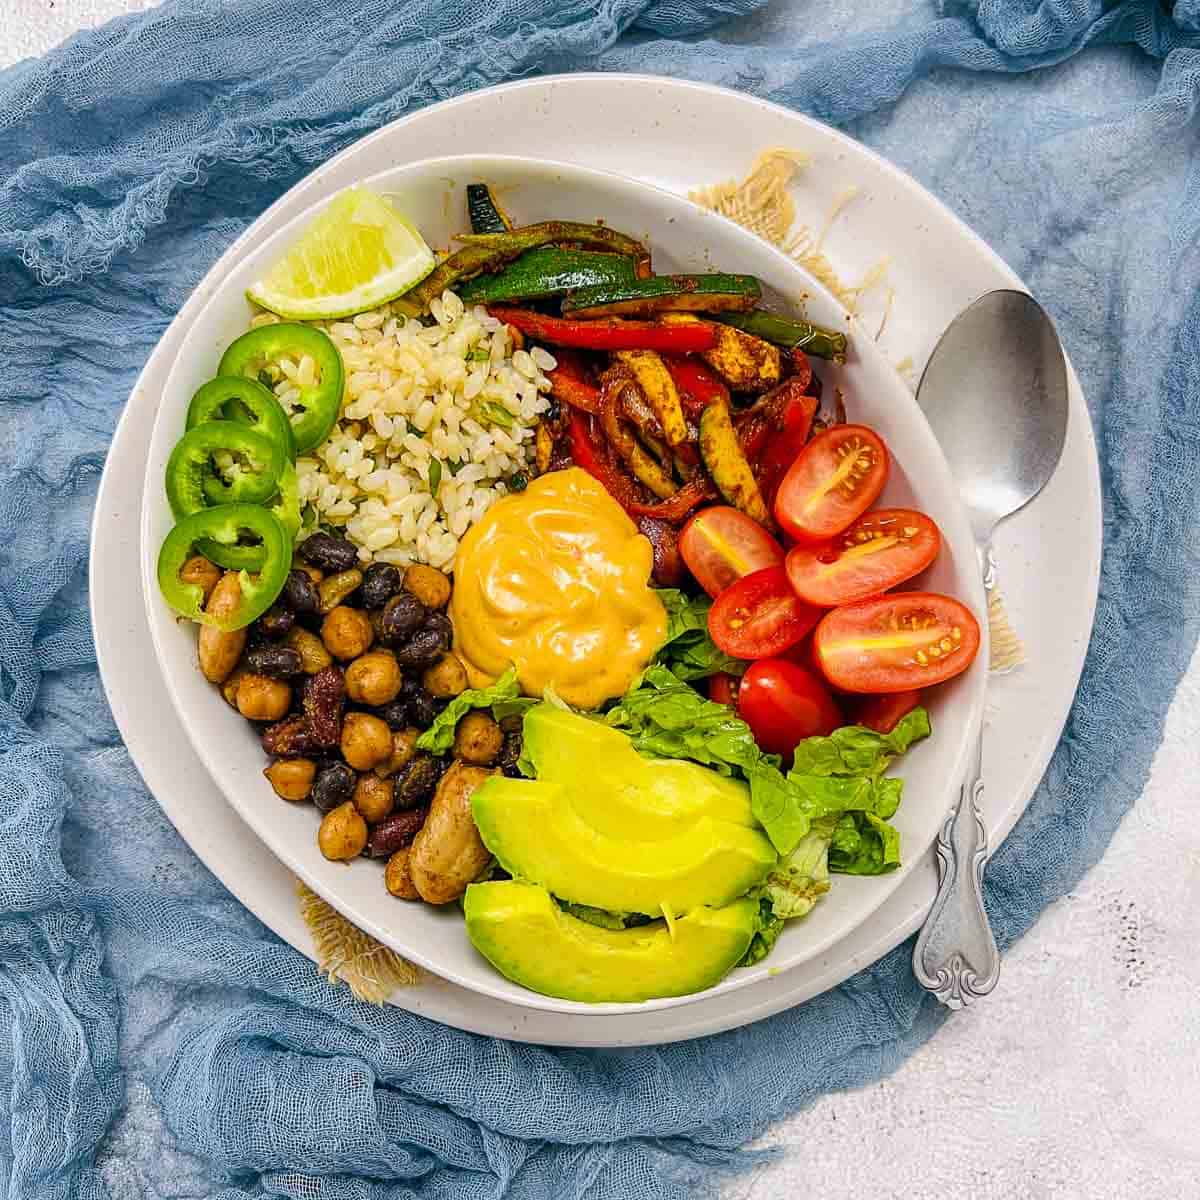 Taco Buddha bowl with mixed beans, cilantro rice, salad greens, and sauted veggies.